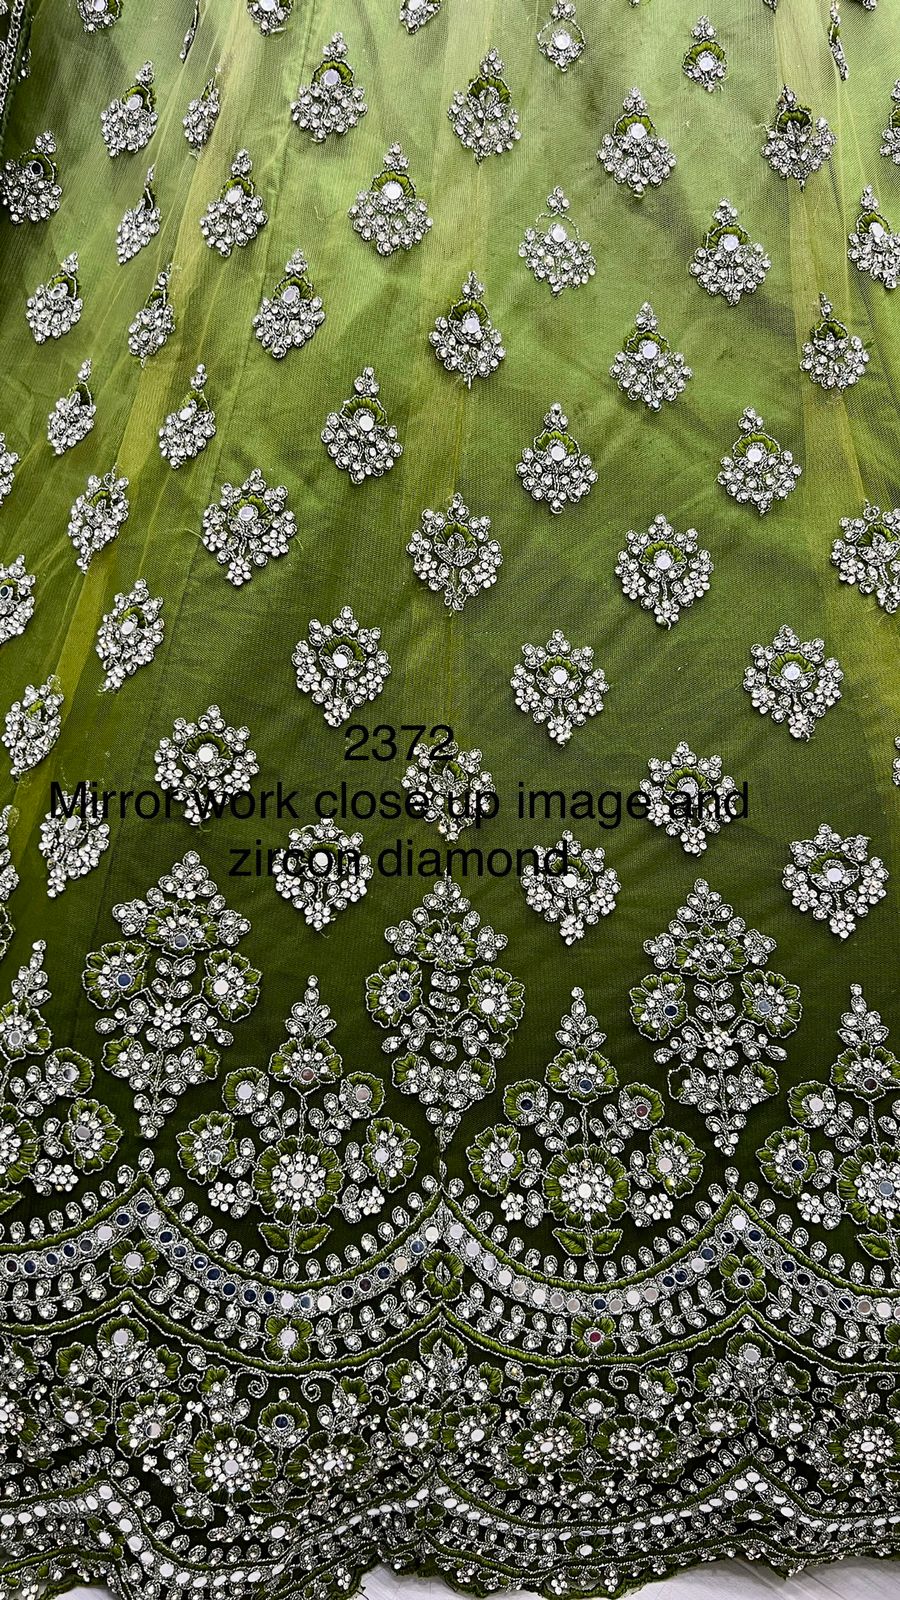 Designer Wedding Mirror Work Lehenga Choli 2372 Anant Tex Exports Private Limited